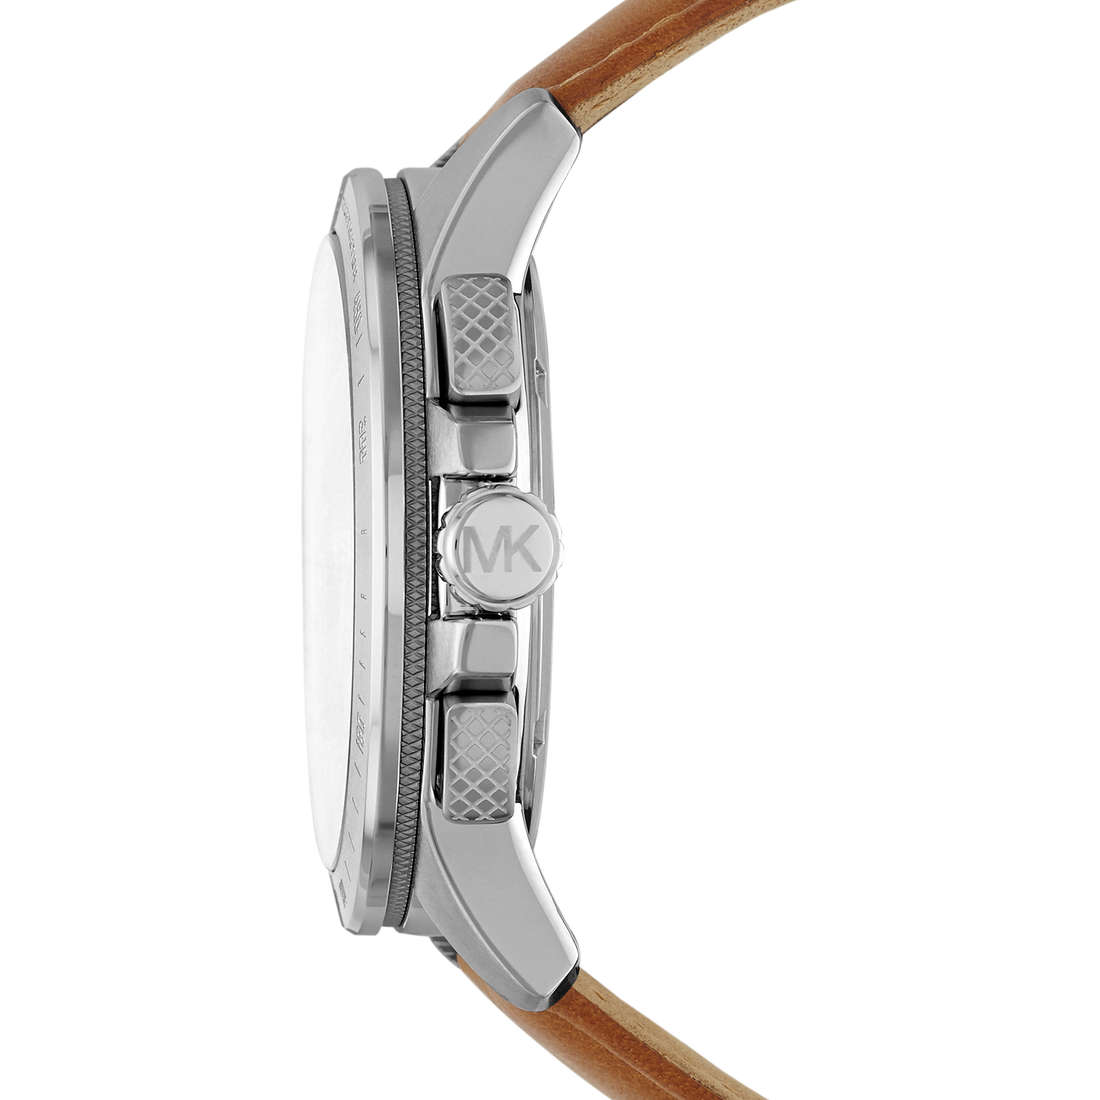 watch chronograph man Michael Kors Ryker MK8518